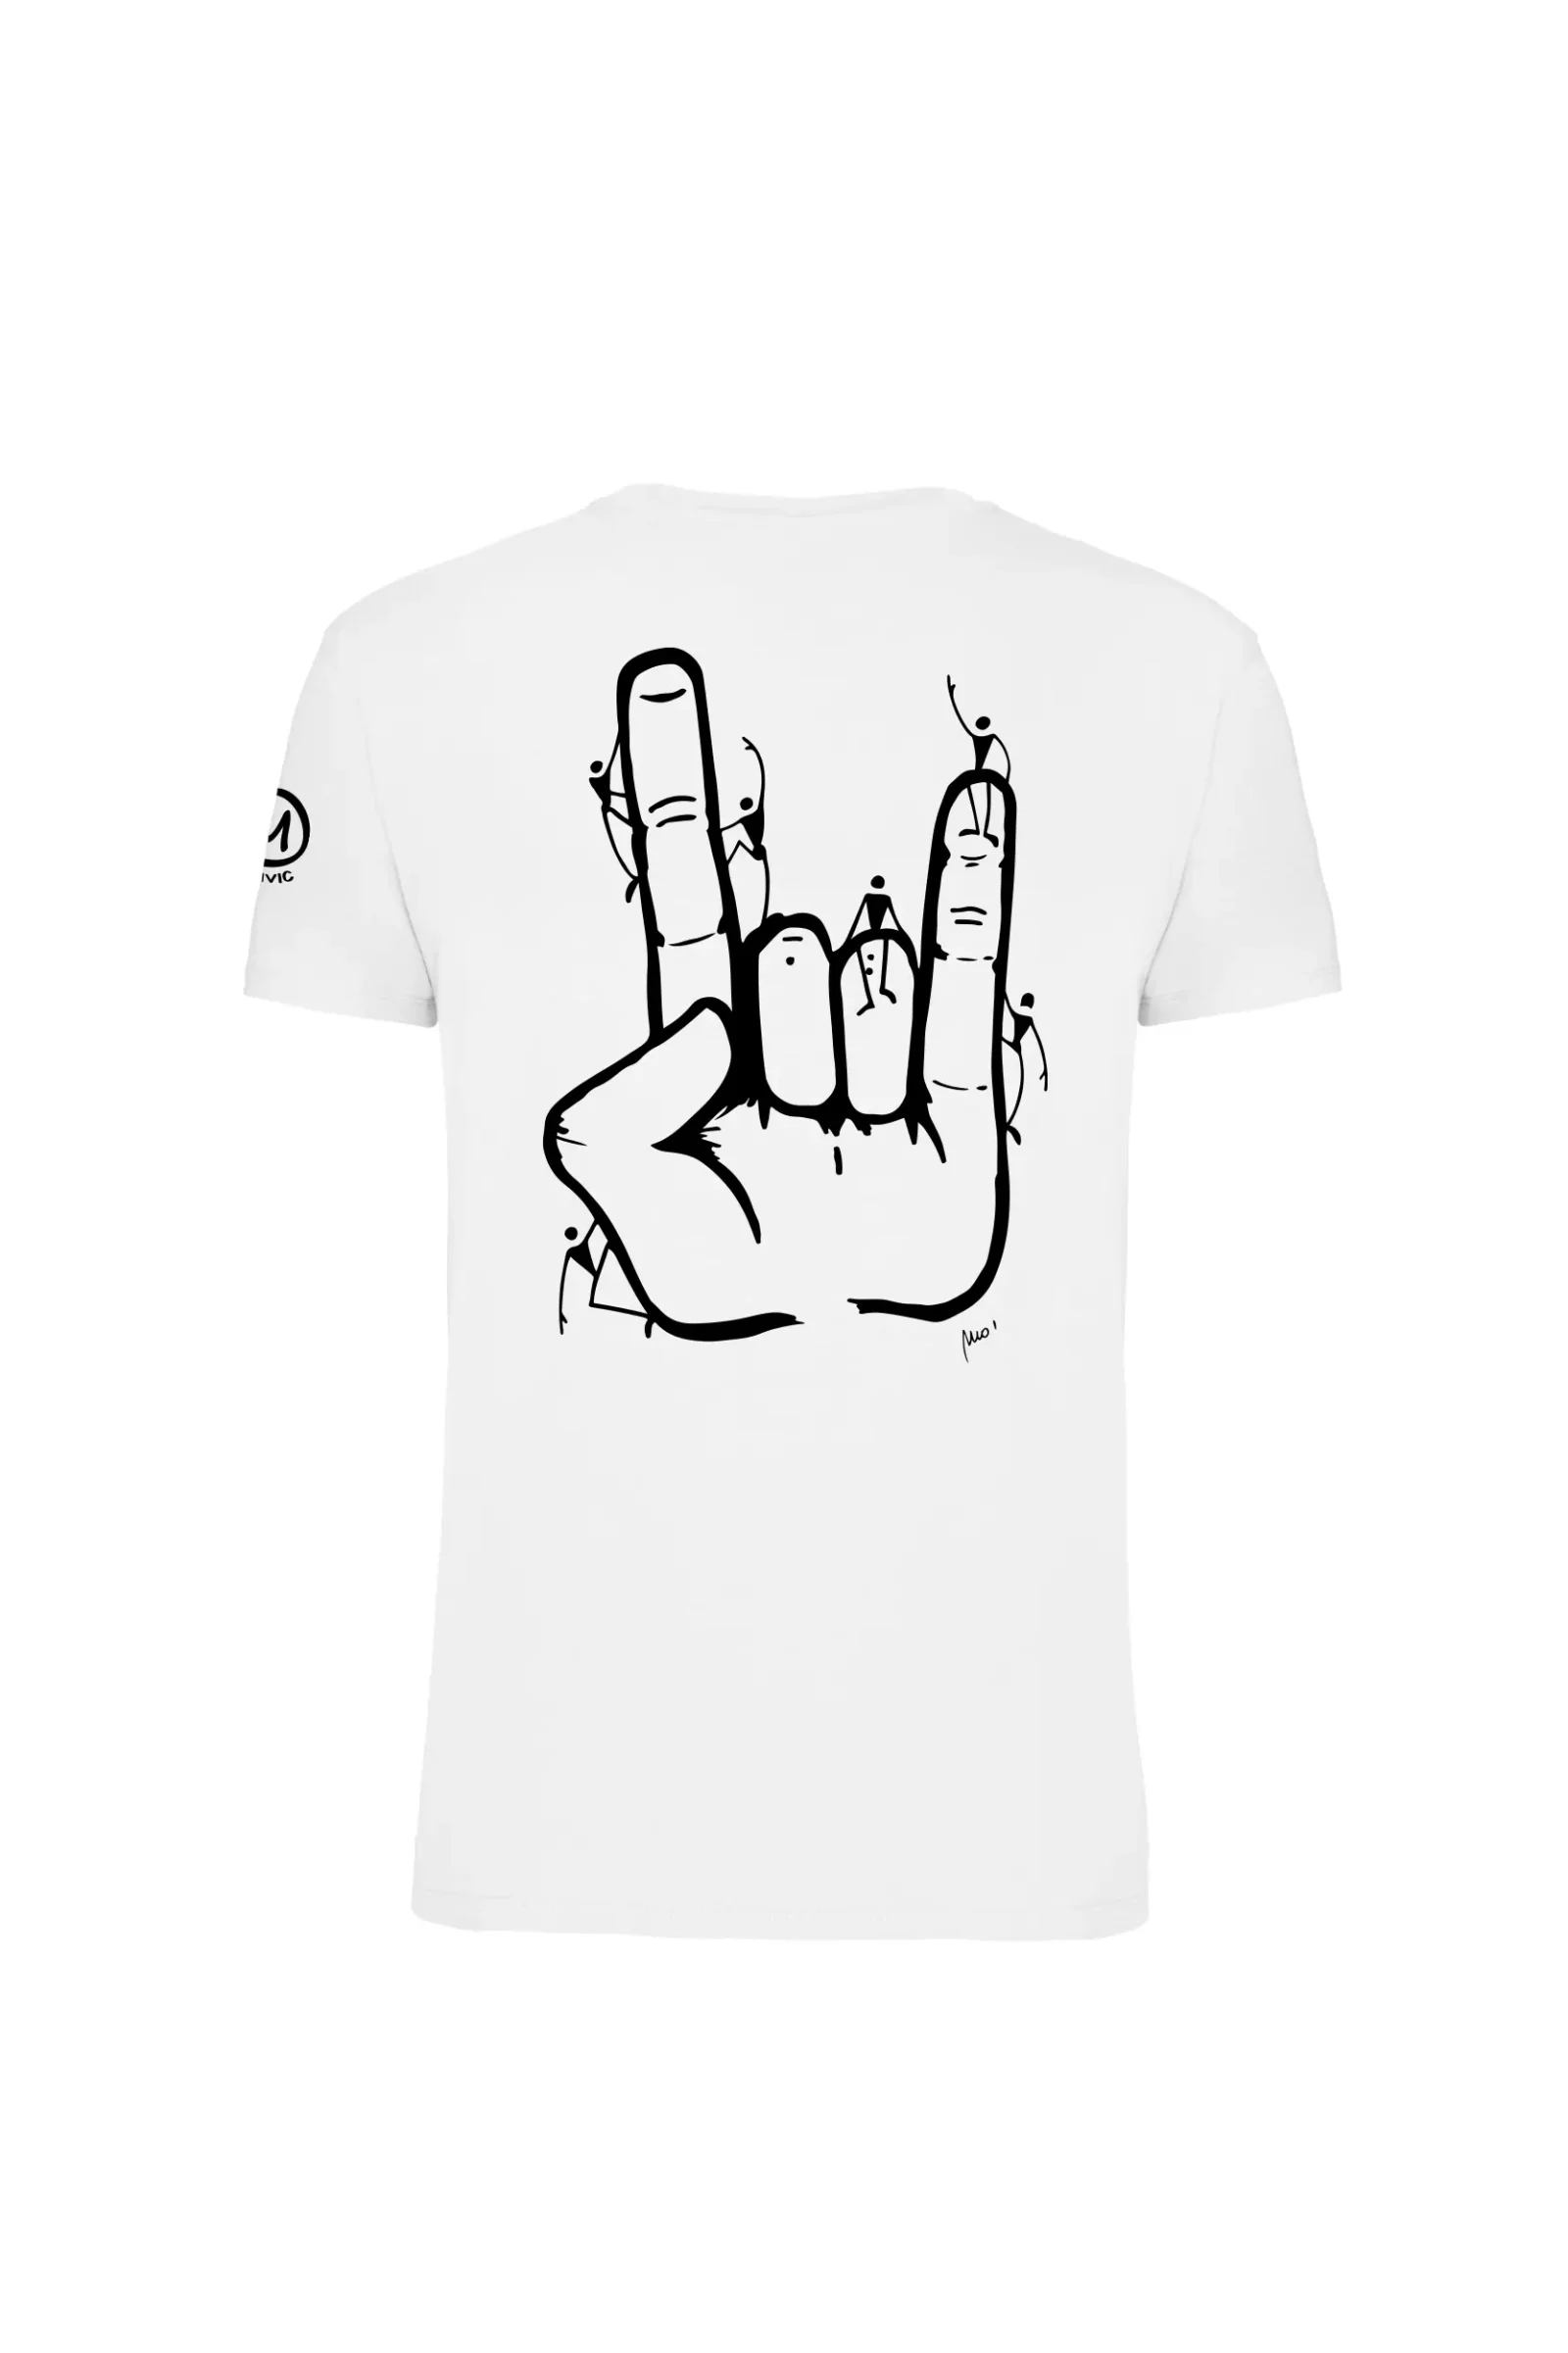 T-shirt arrampicata uomo - cotone bianco - "Tiè" corna - HASH MONVIC